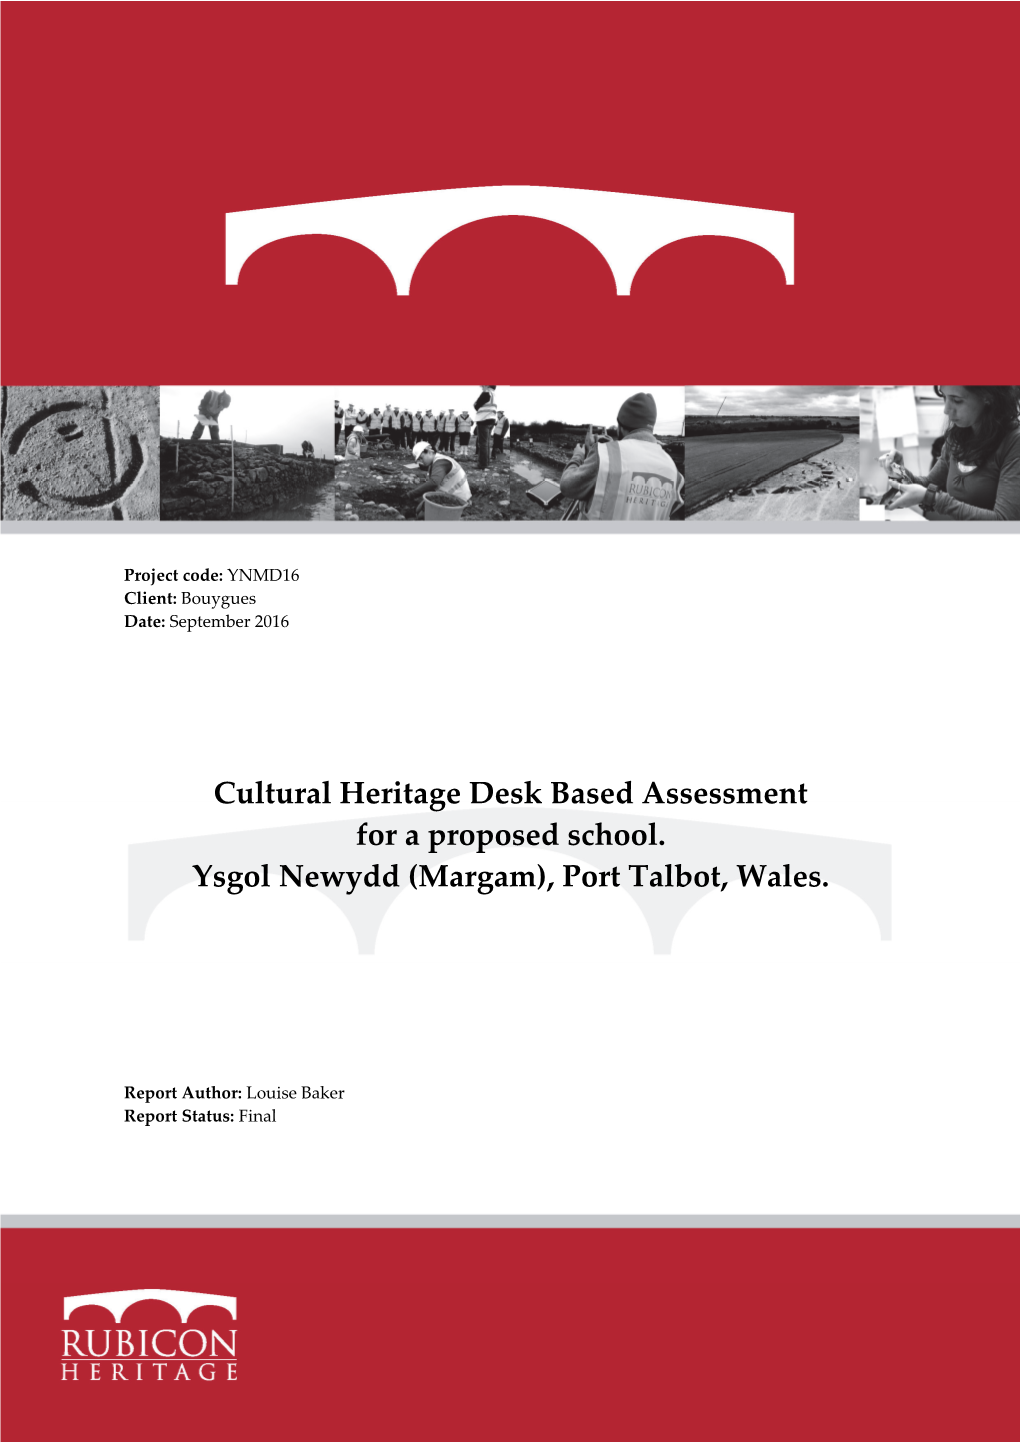 Cultural Heritage Desk Based Assessment for a Proposed School